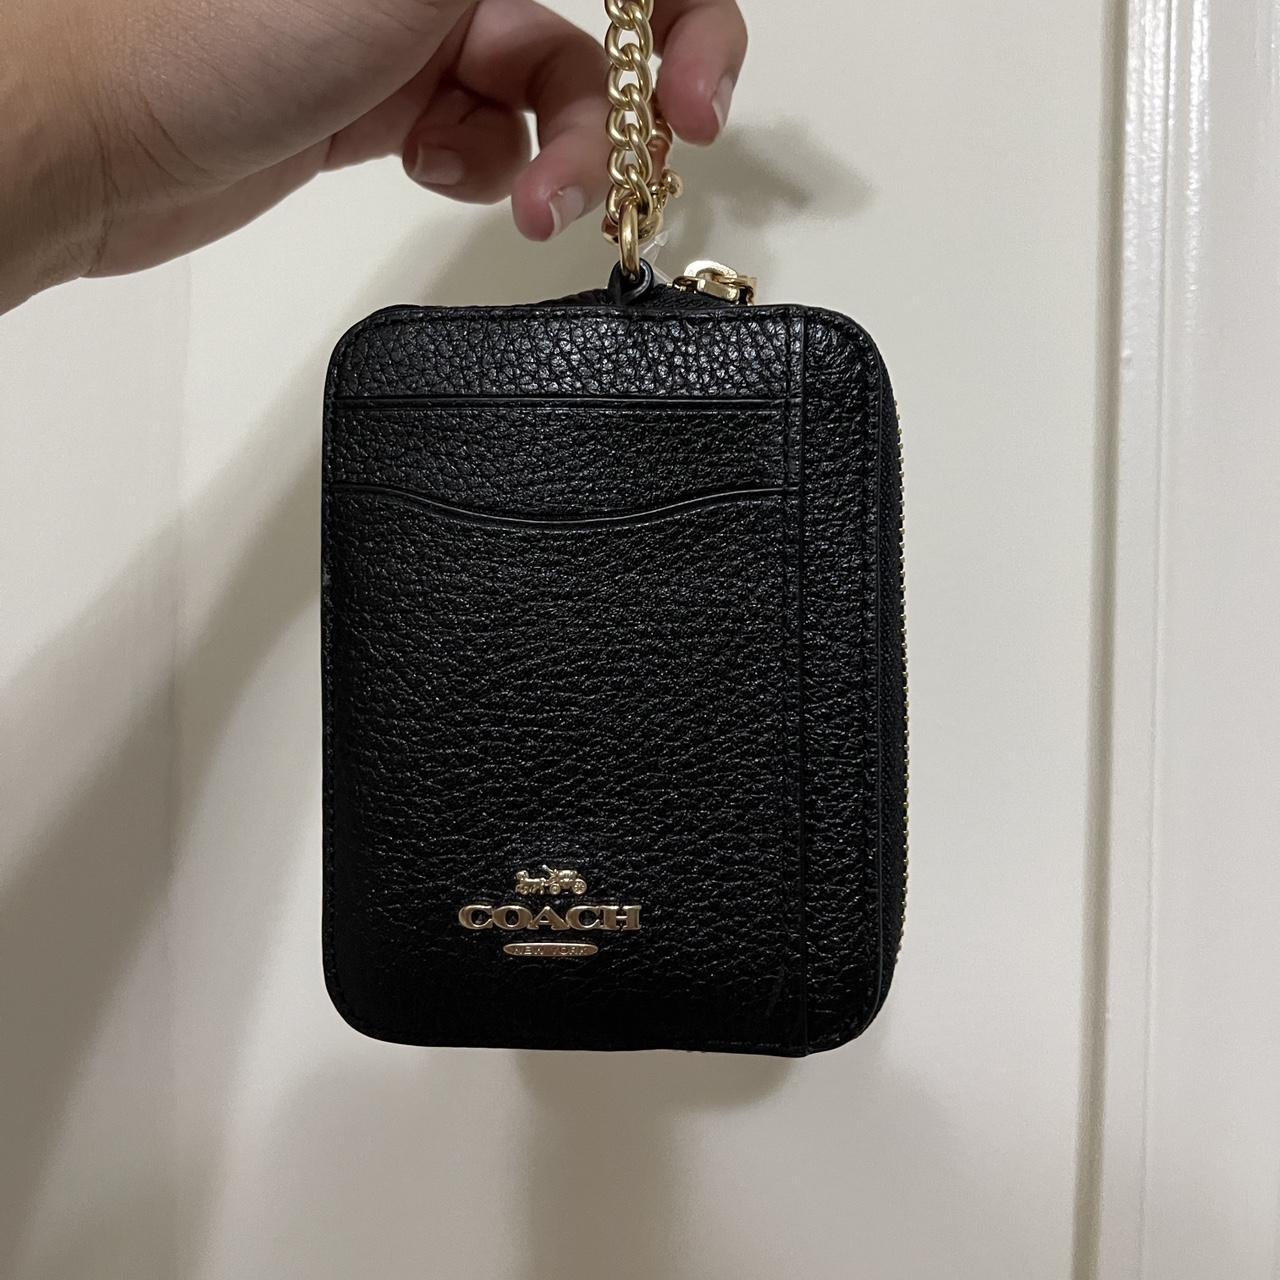 Coach Leather Zip Card Case - Black